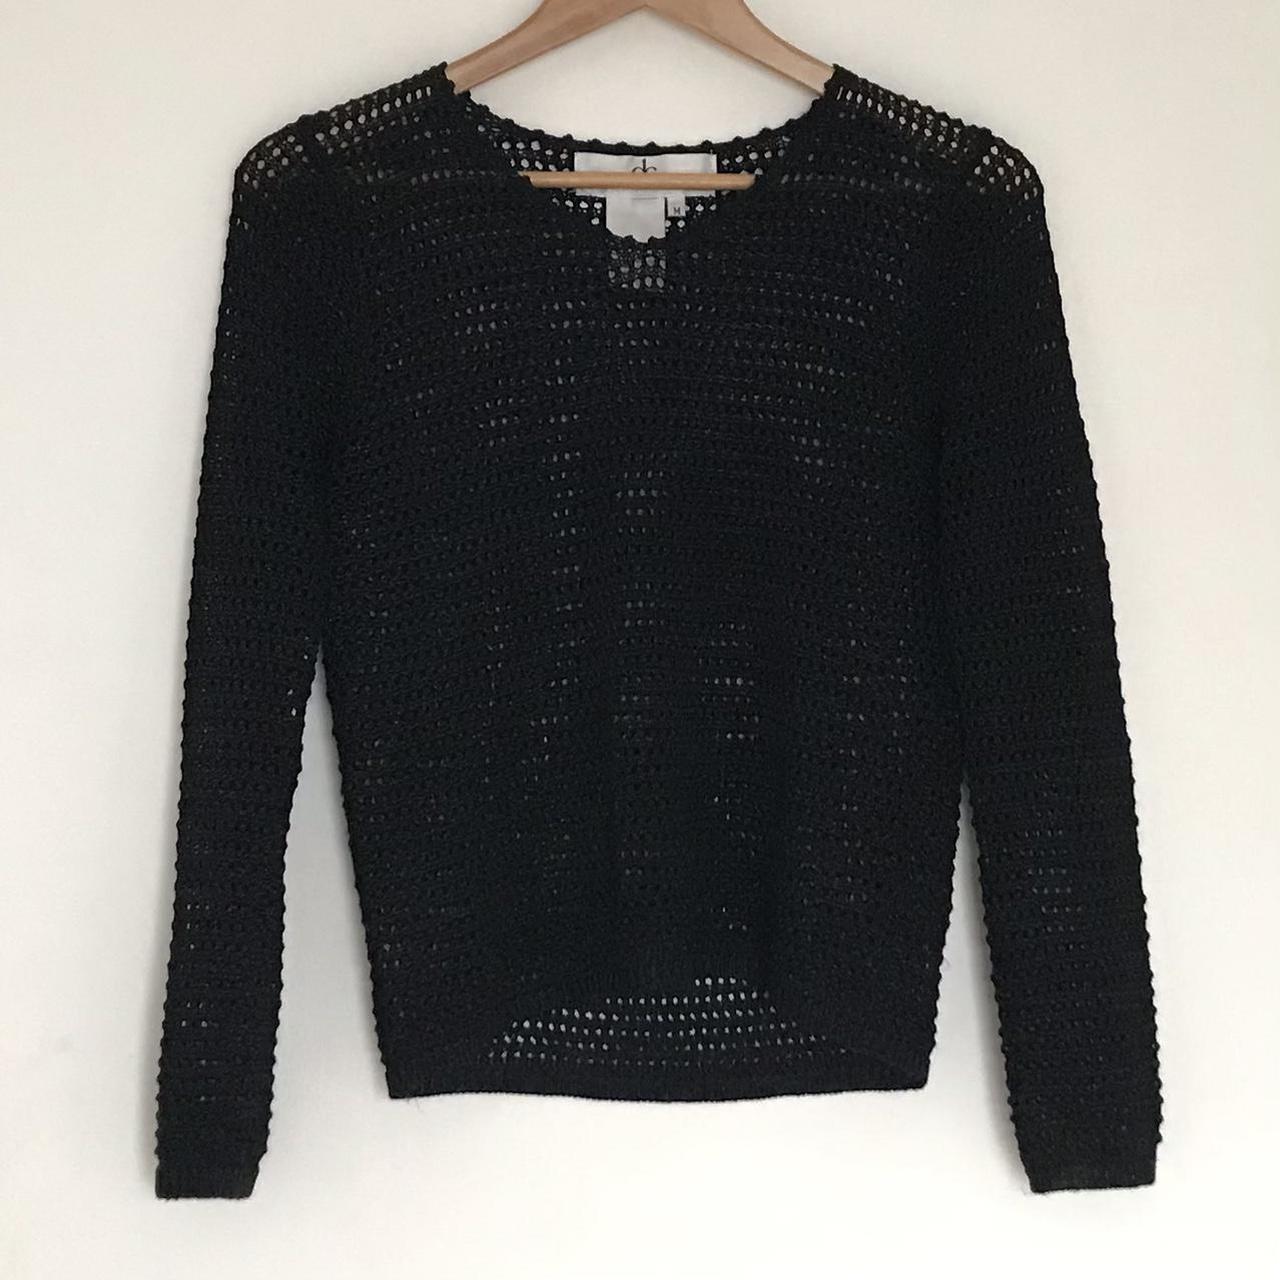 Black mesh net knit long sleeve blouse made of rayon... - Depop